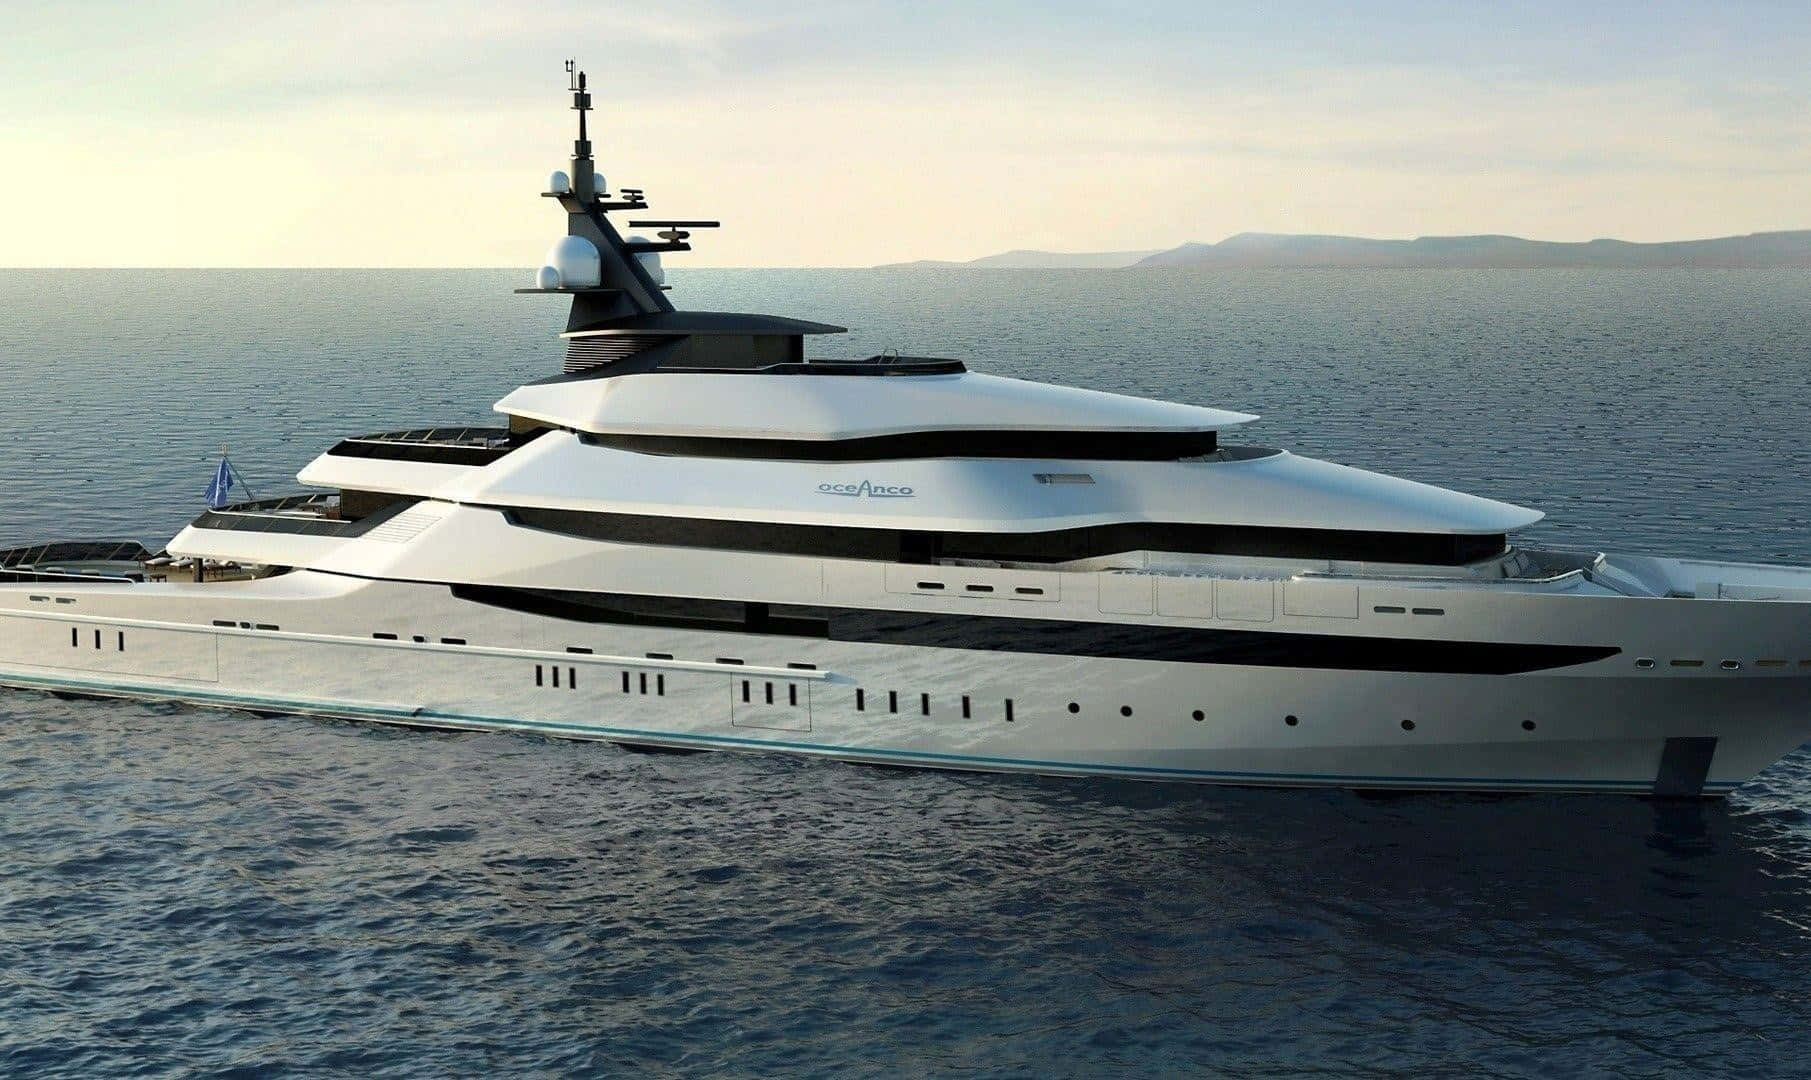 A stunning luxury yacht anchoring off of the stunning Mediterranean coastline